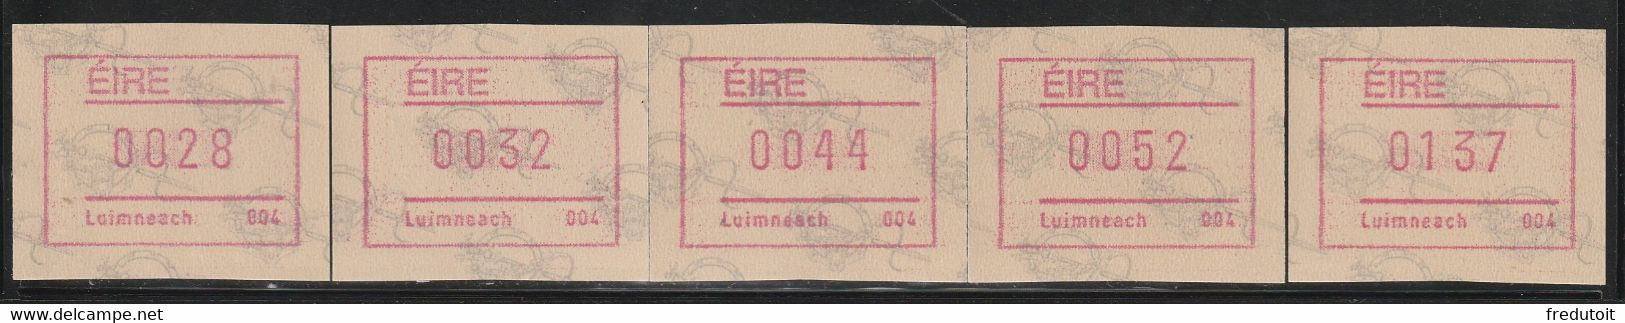 IRLANDE - Timbres Distributeurs / FRAMA  ATM - N°4** (1992) Luimneach 004 - Affrancature Meccaniche/Frama